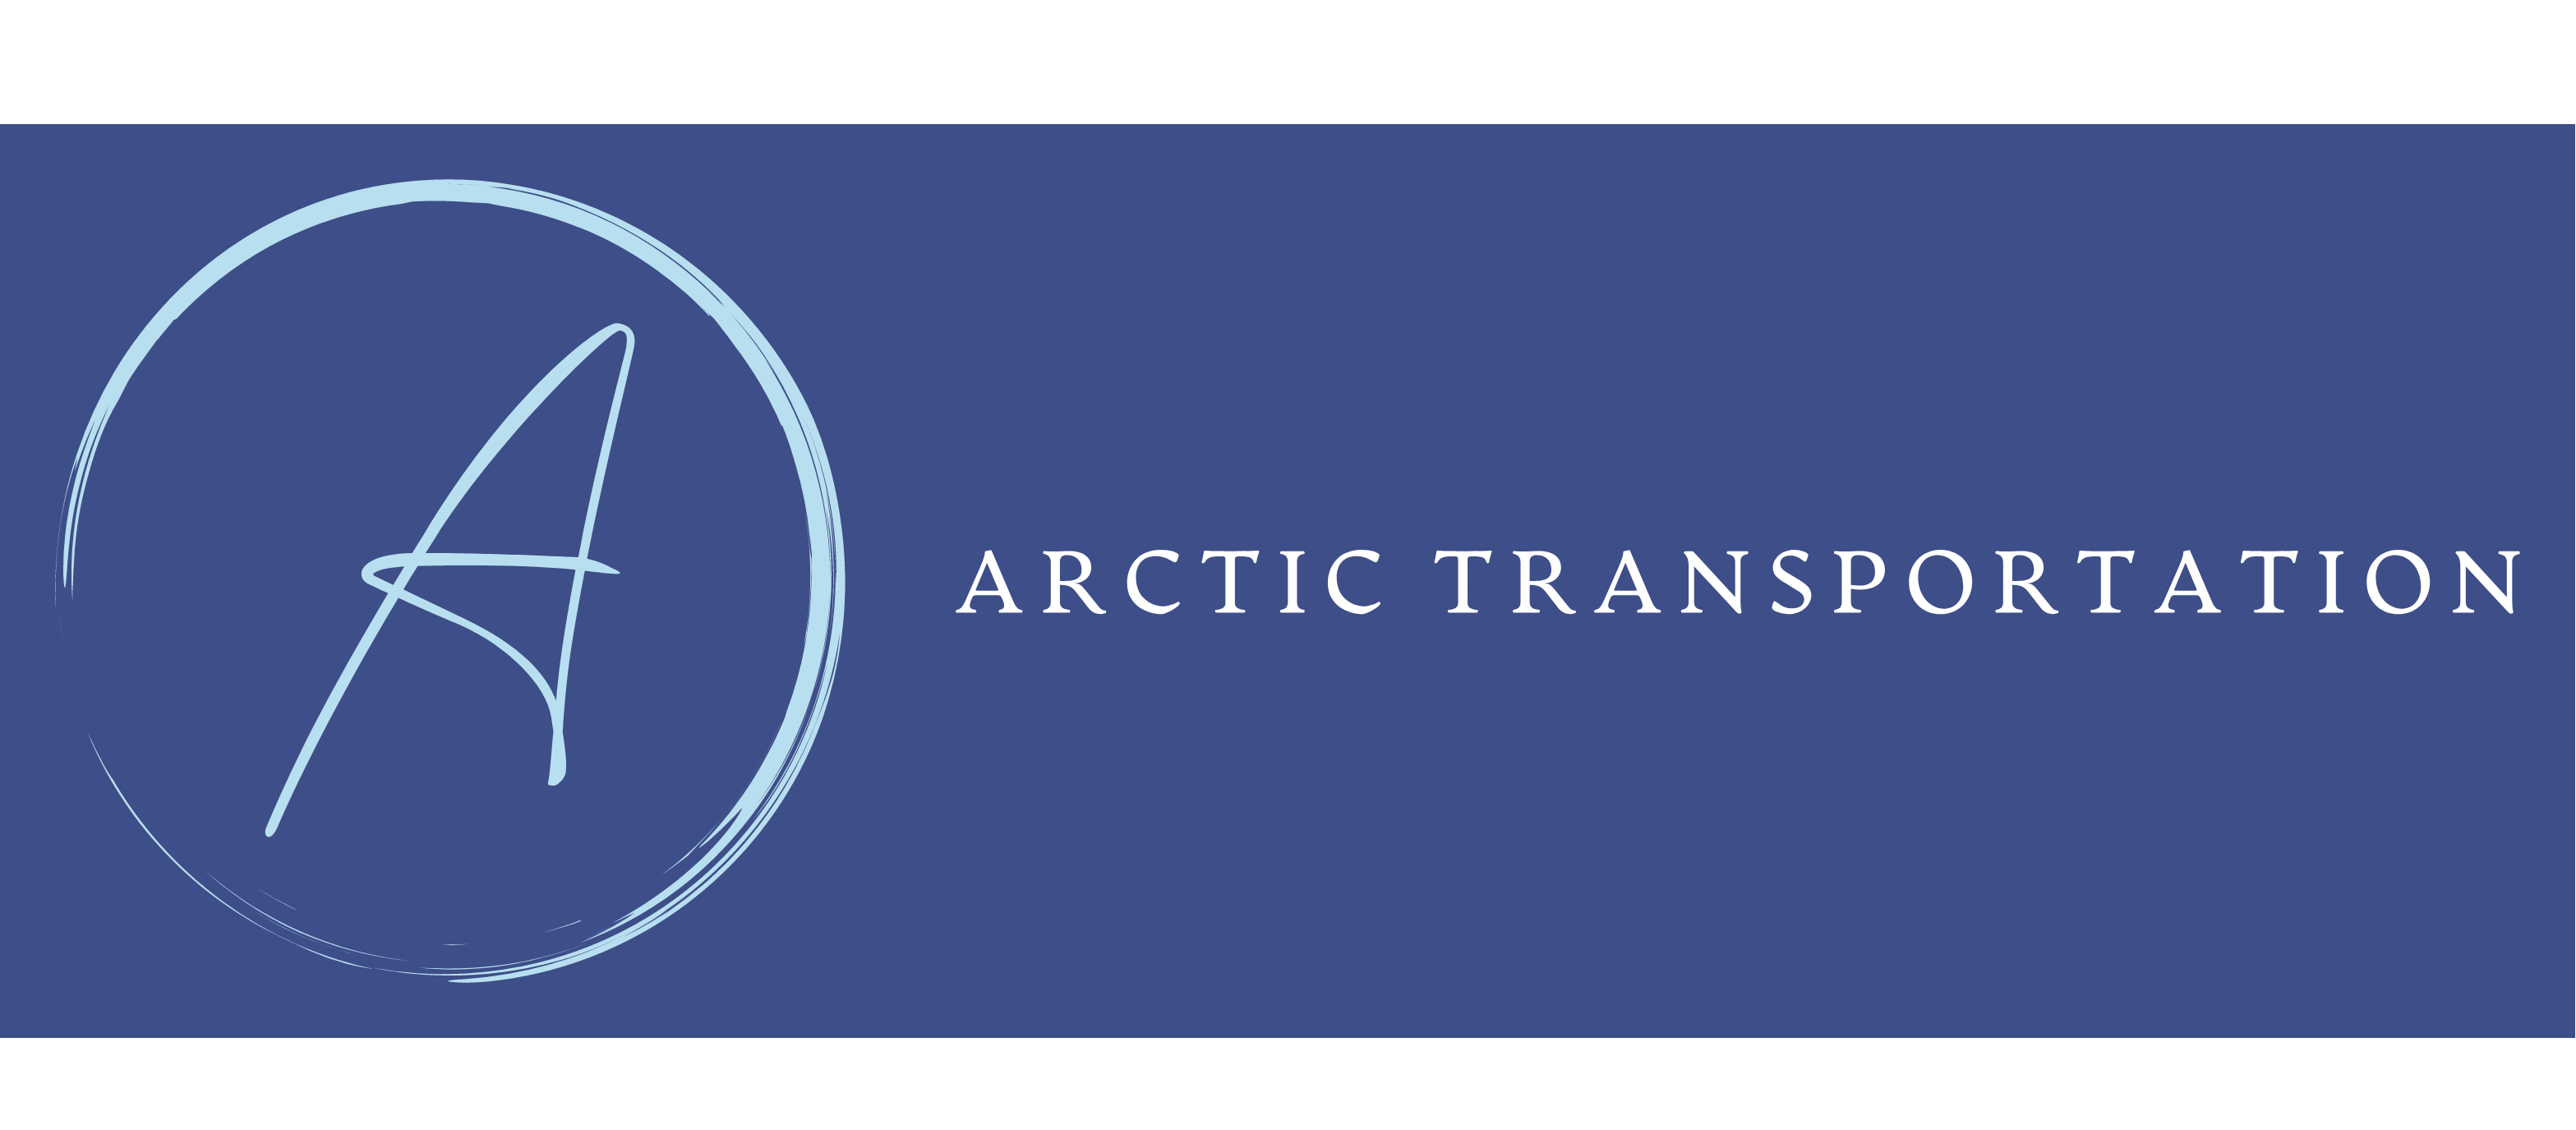 ARCTIC TRANSPORTATION SERVICES